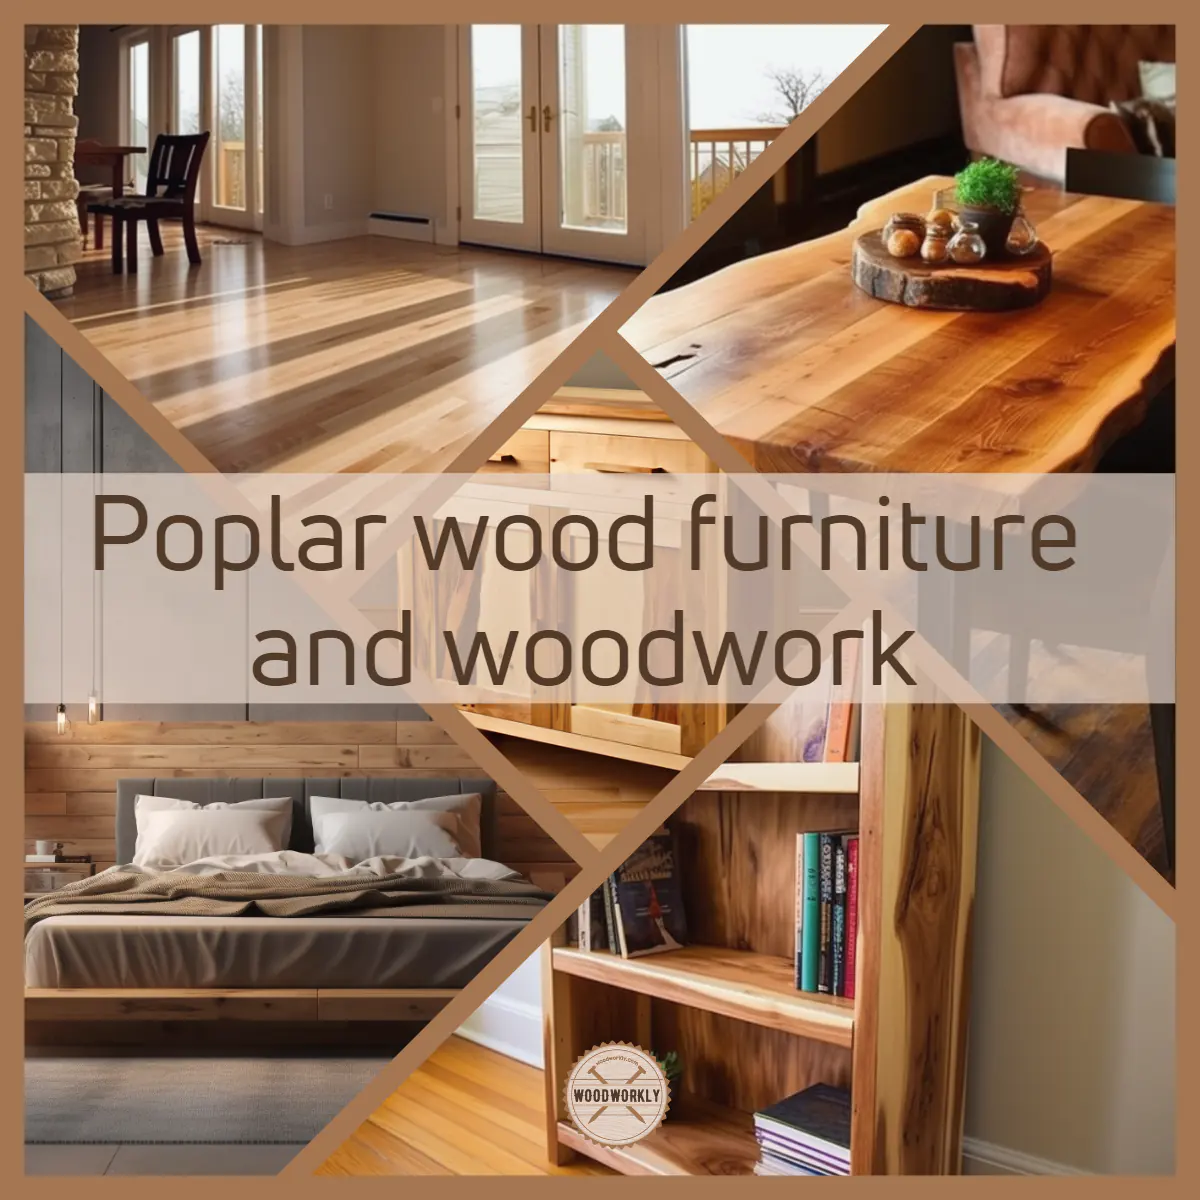 Poplar wood furniture and woodwork